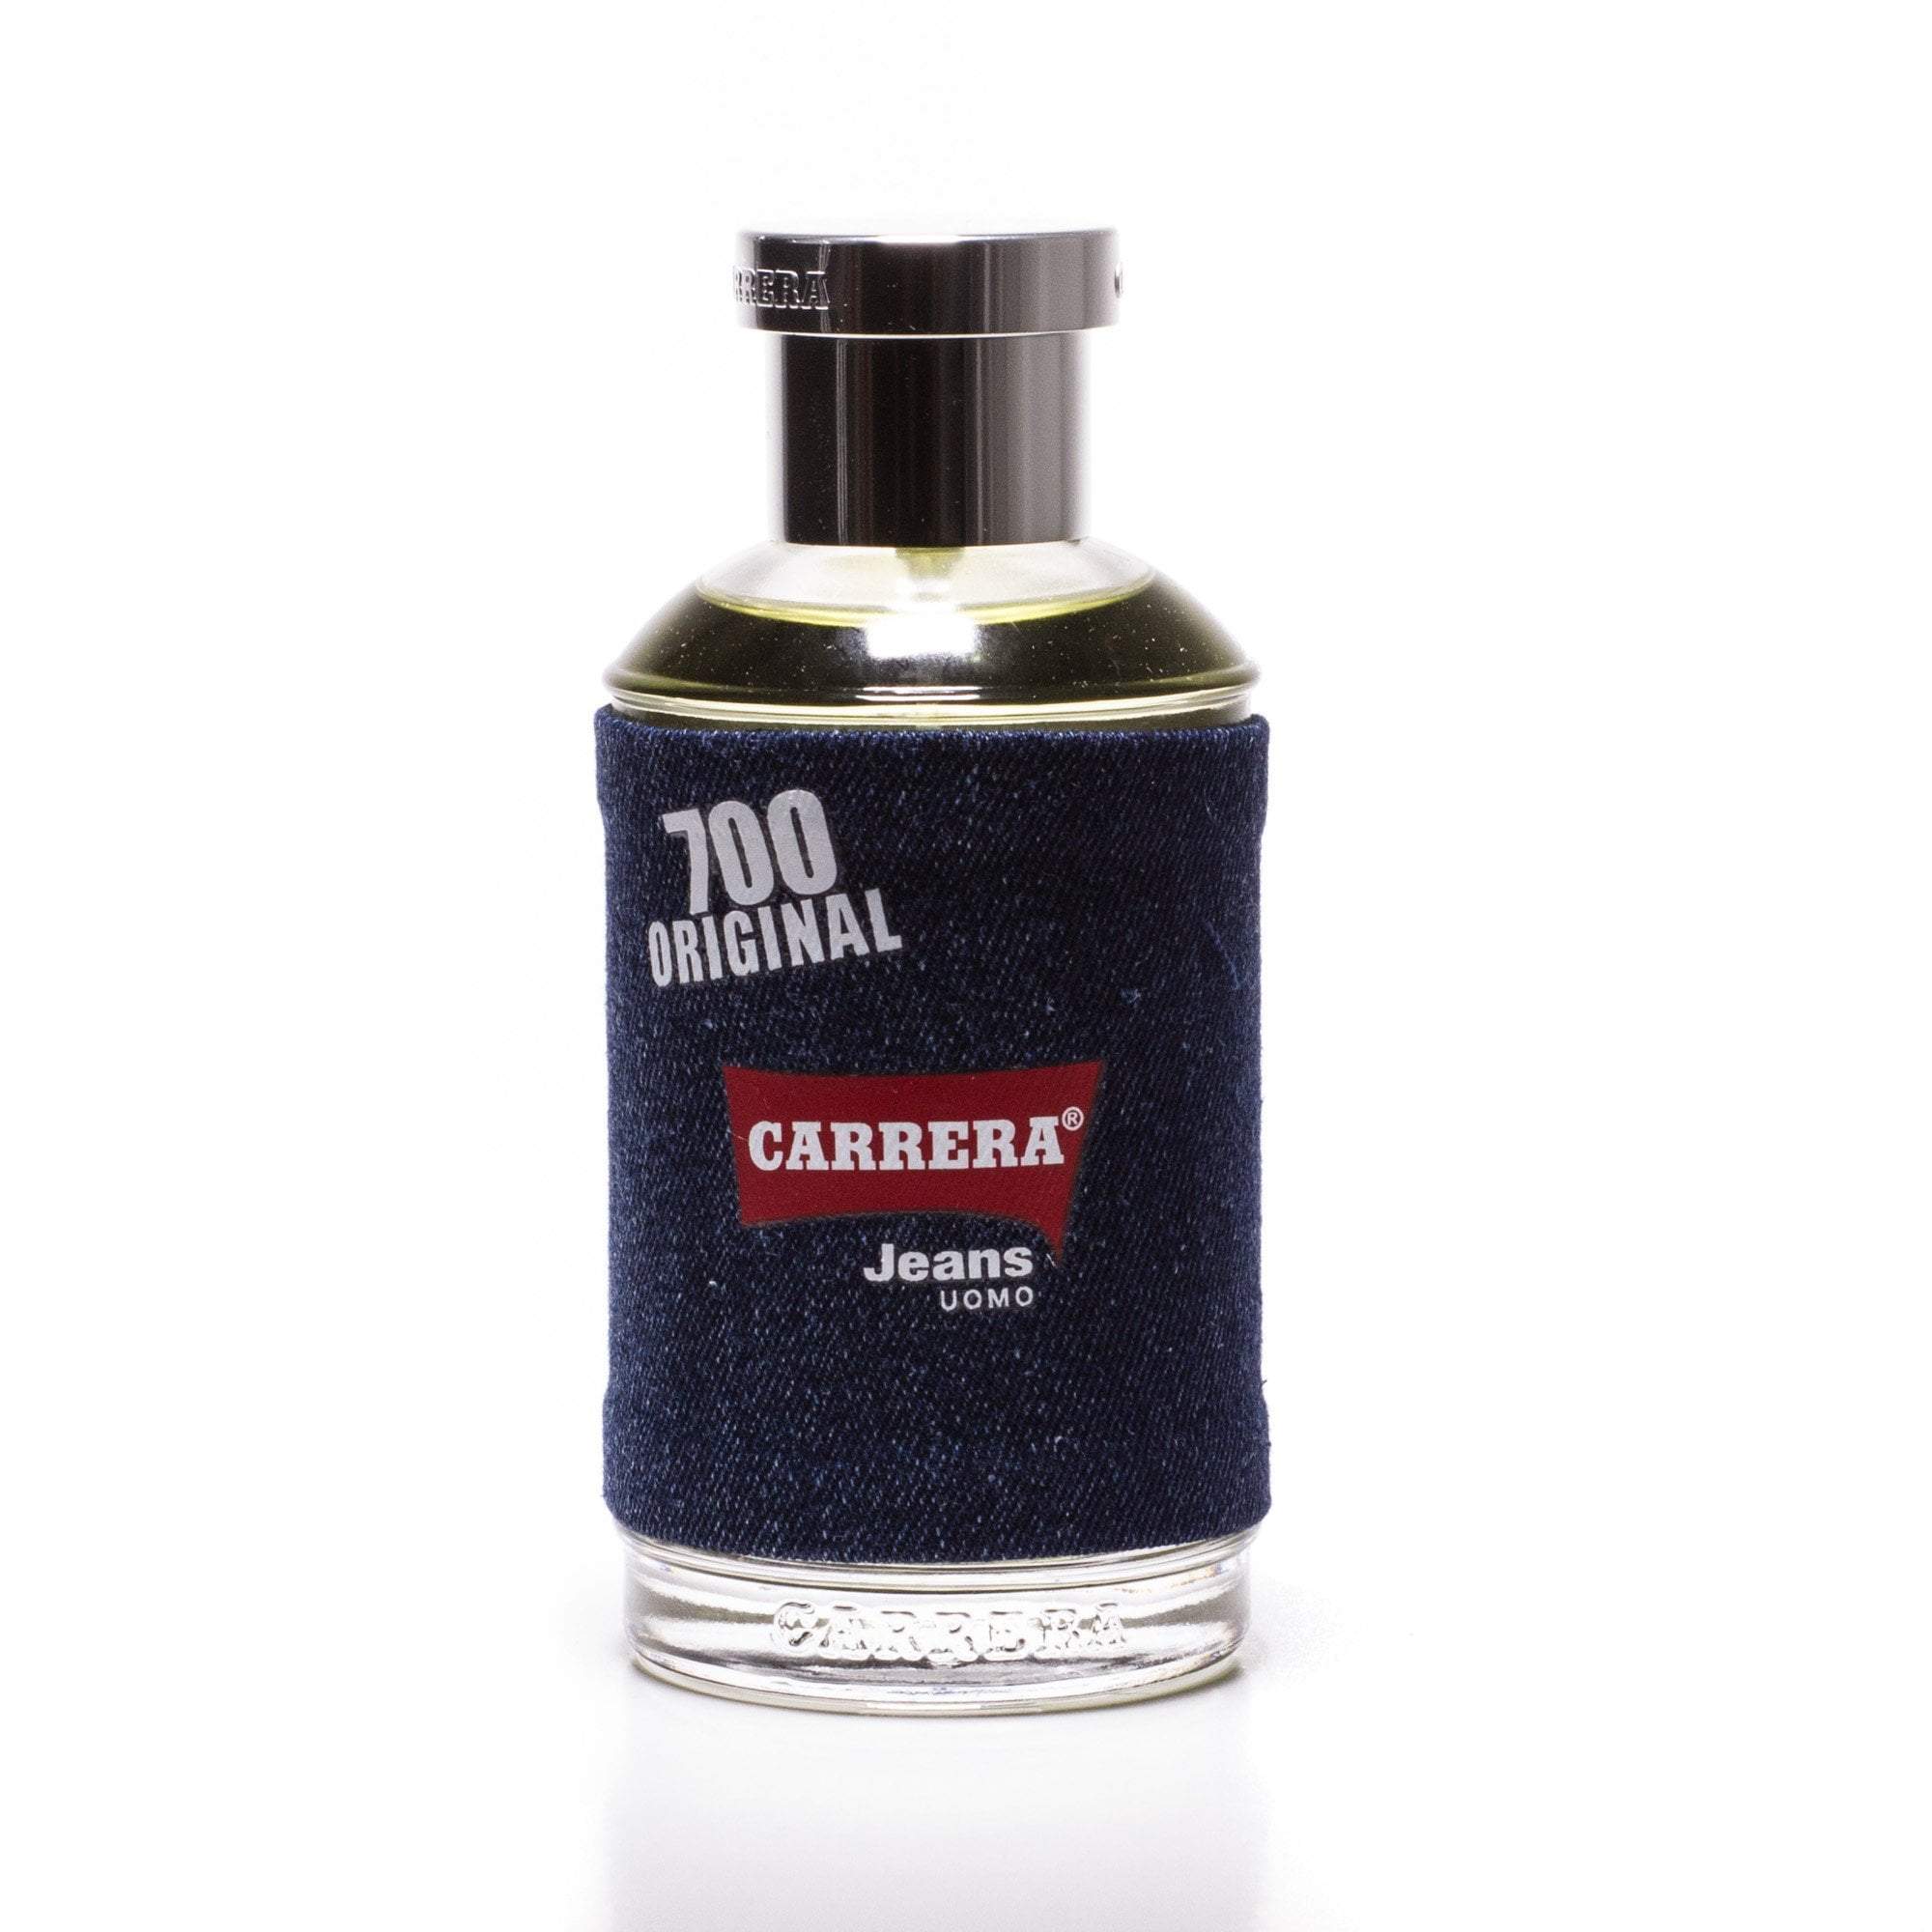 Carrera Jeans Eau de Toilette Spray for – Fragrance